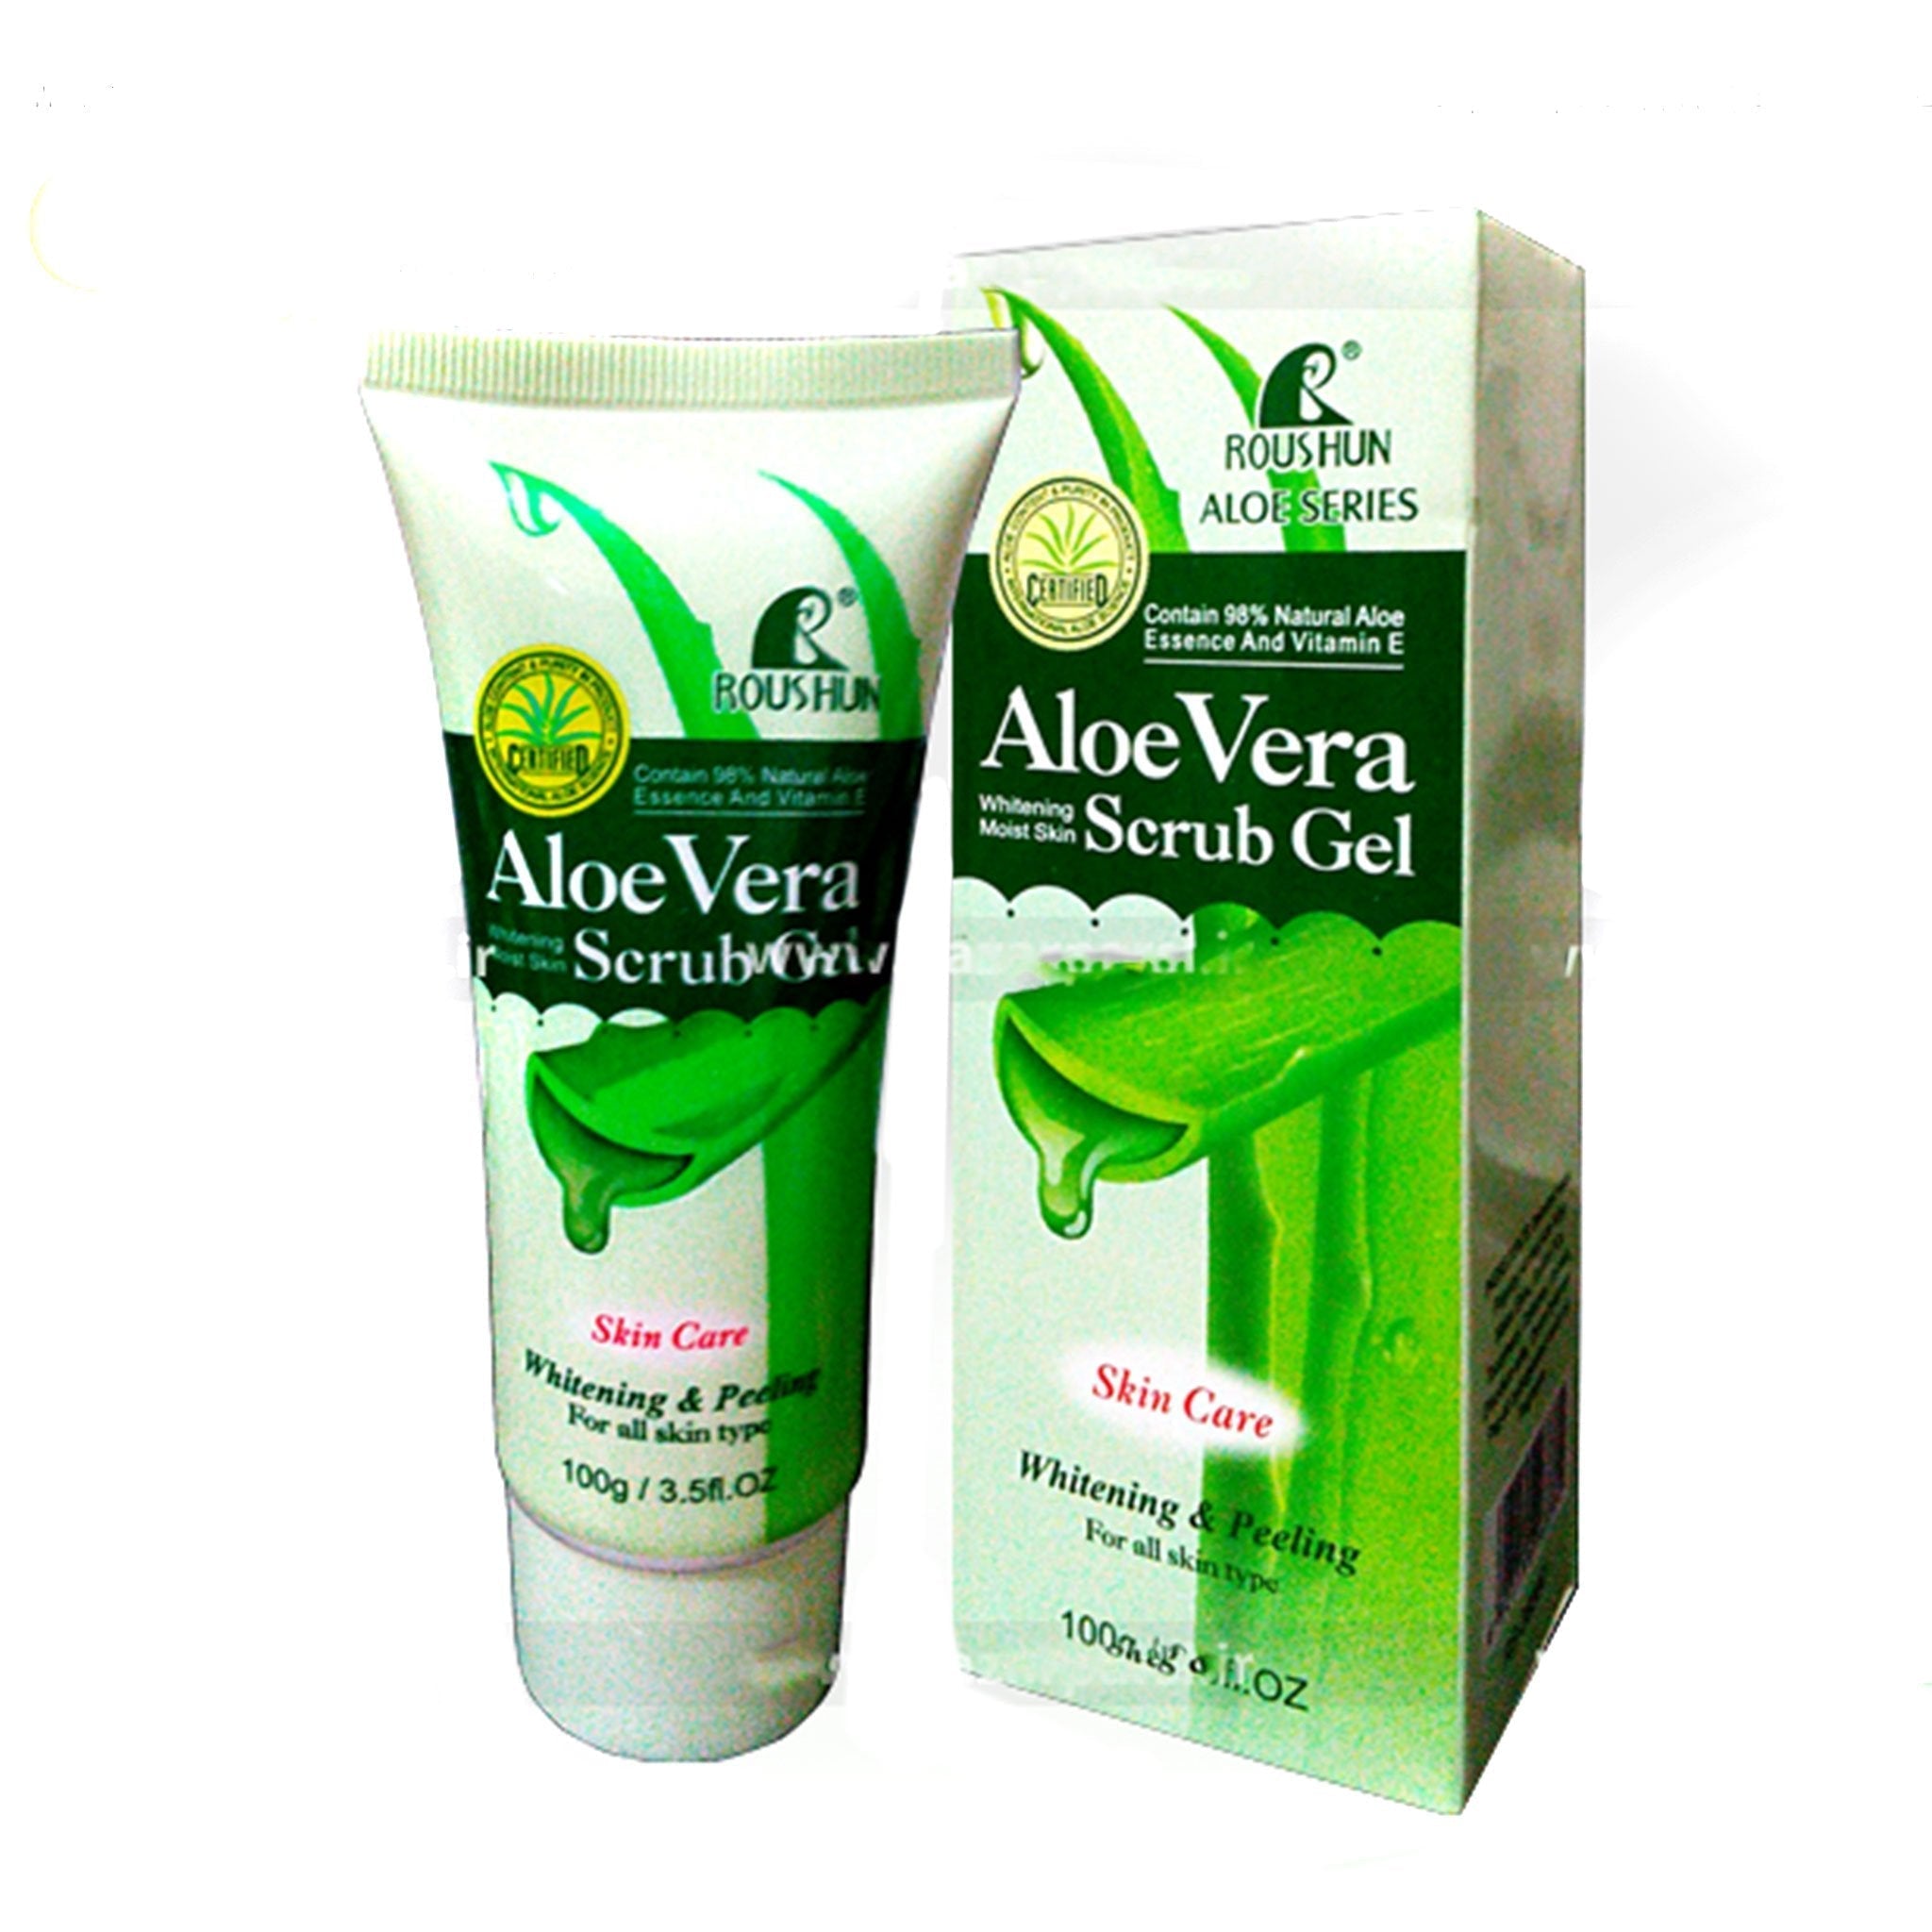 Roushun Aloe Vera Facial Scrub Gel 100g Value Pack of 2 